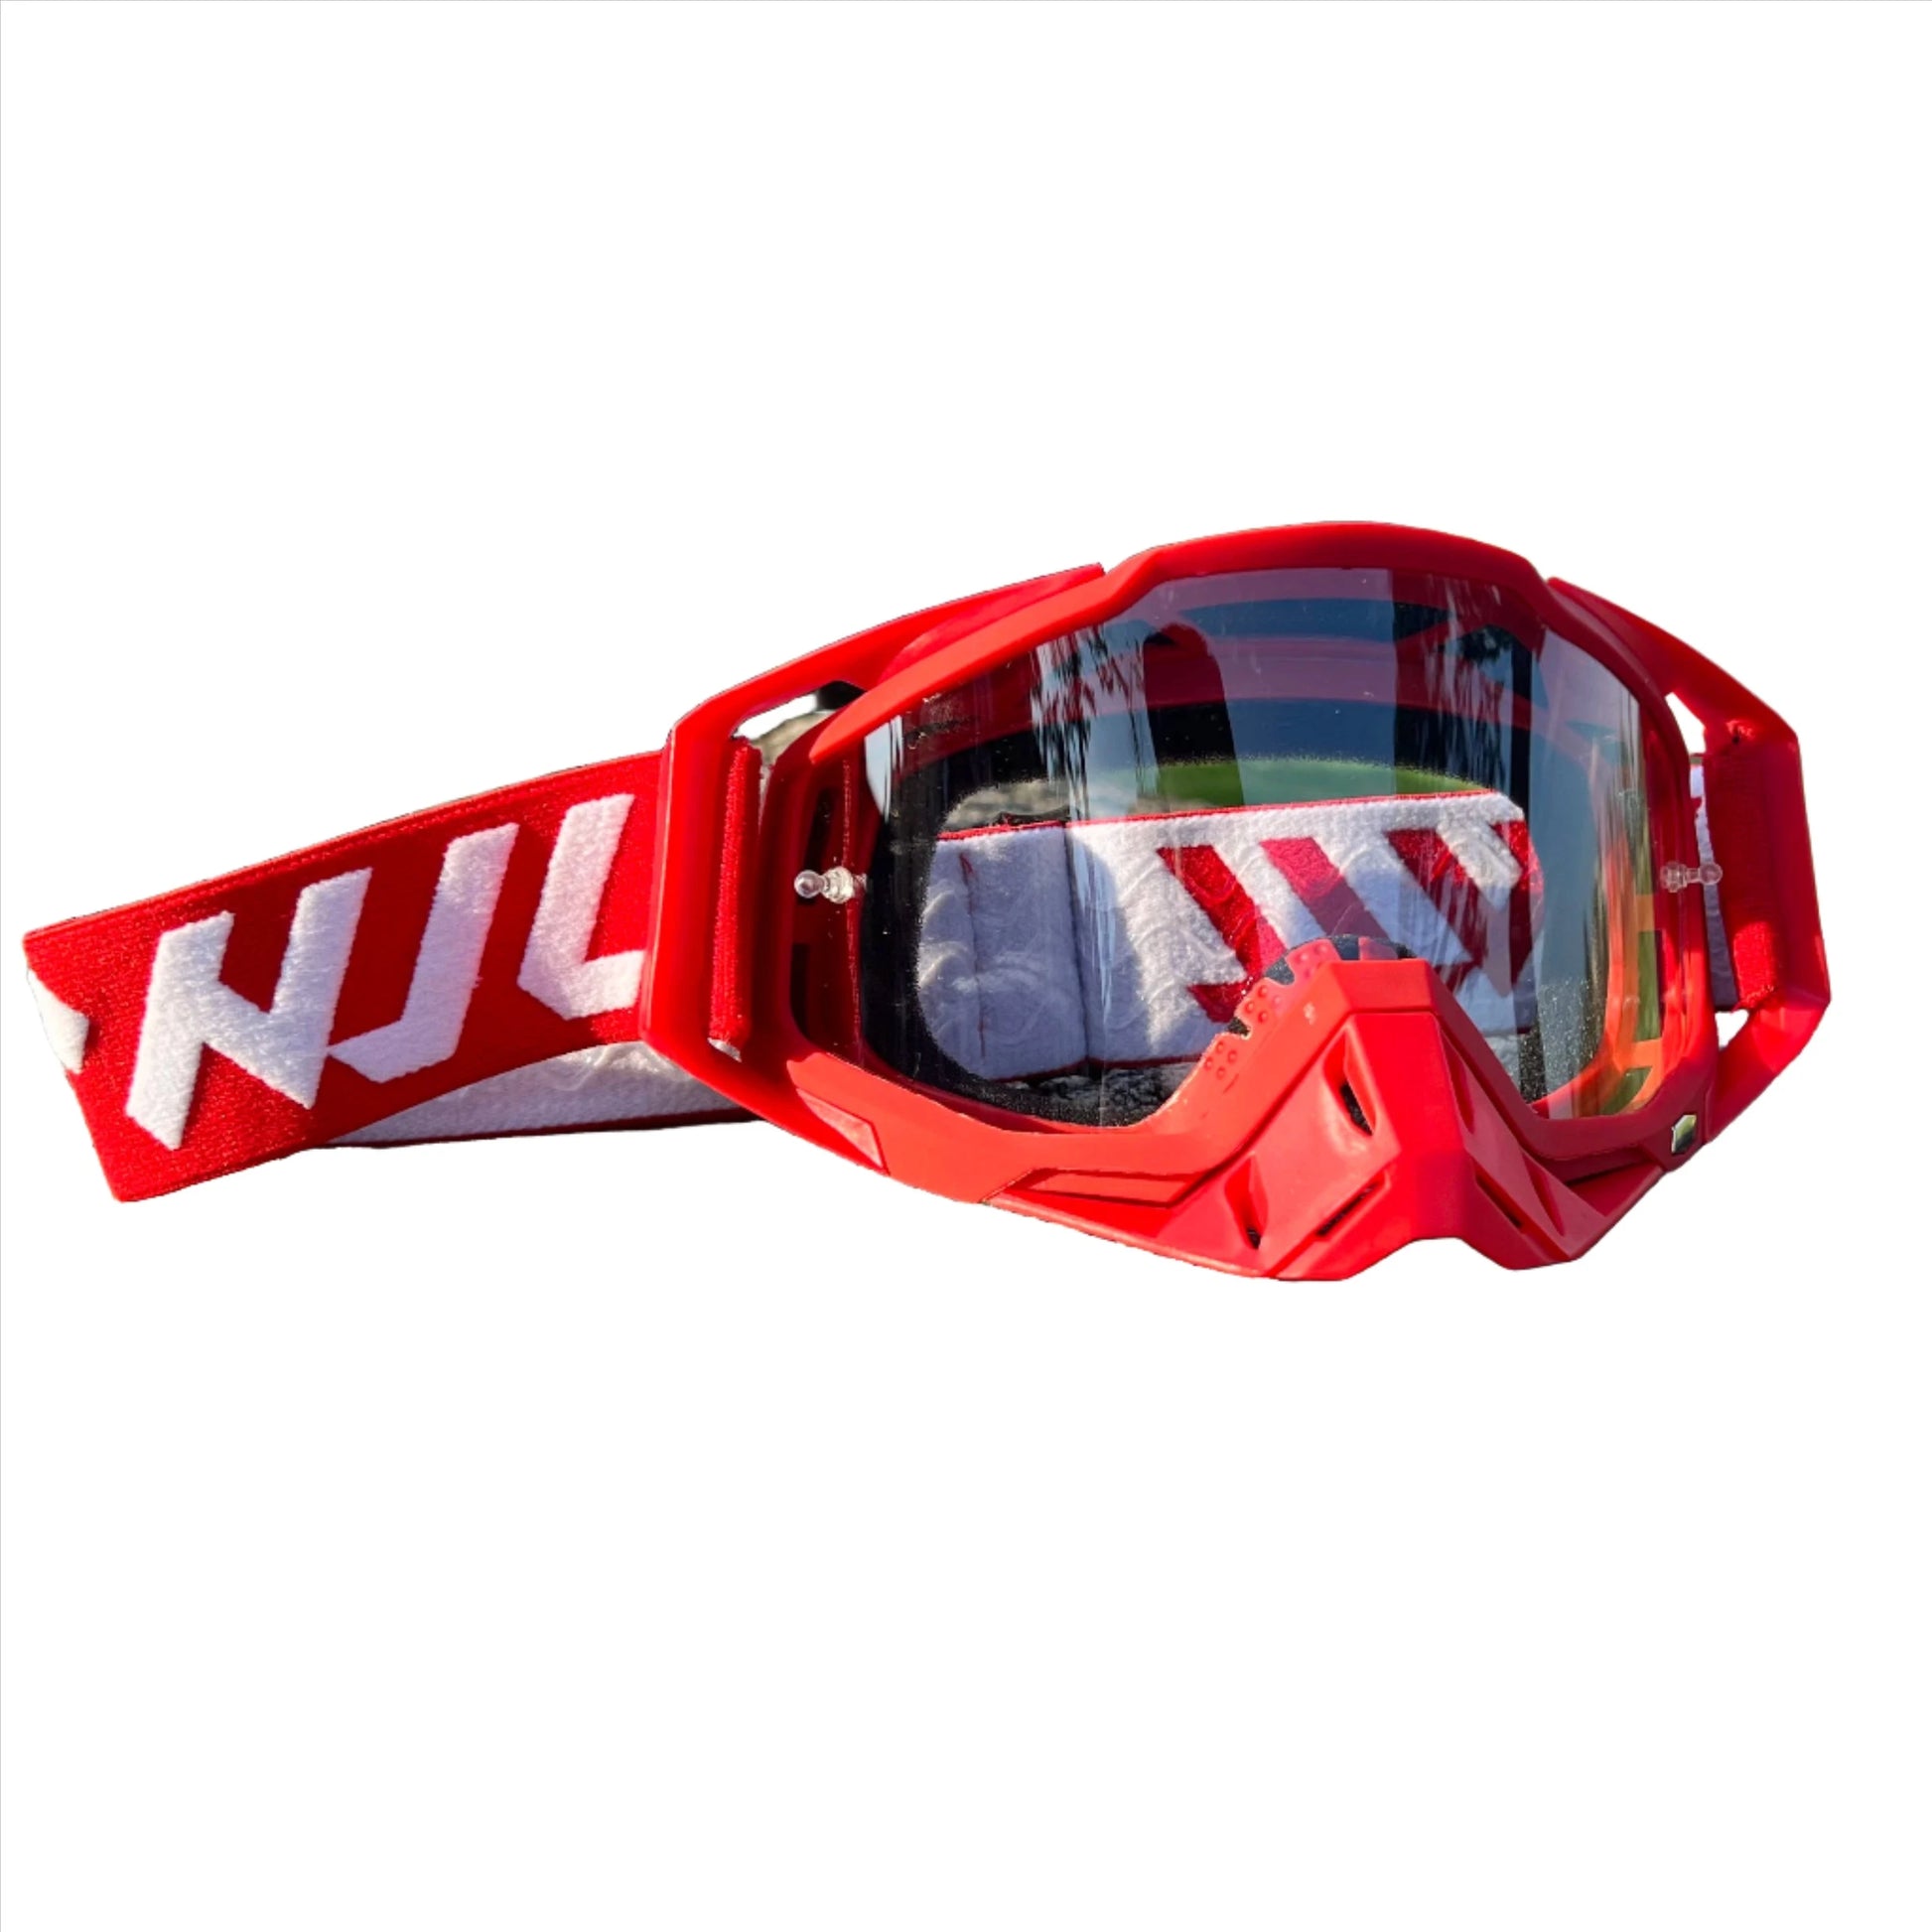 WJL Motocross Motorcycle Racing Off-Road Goggles